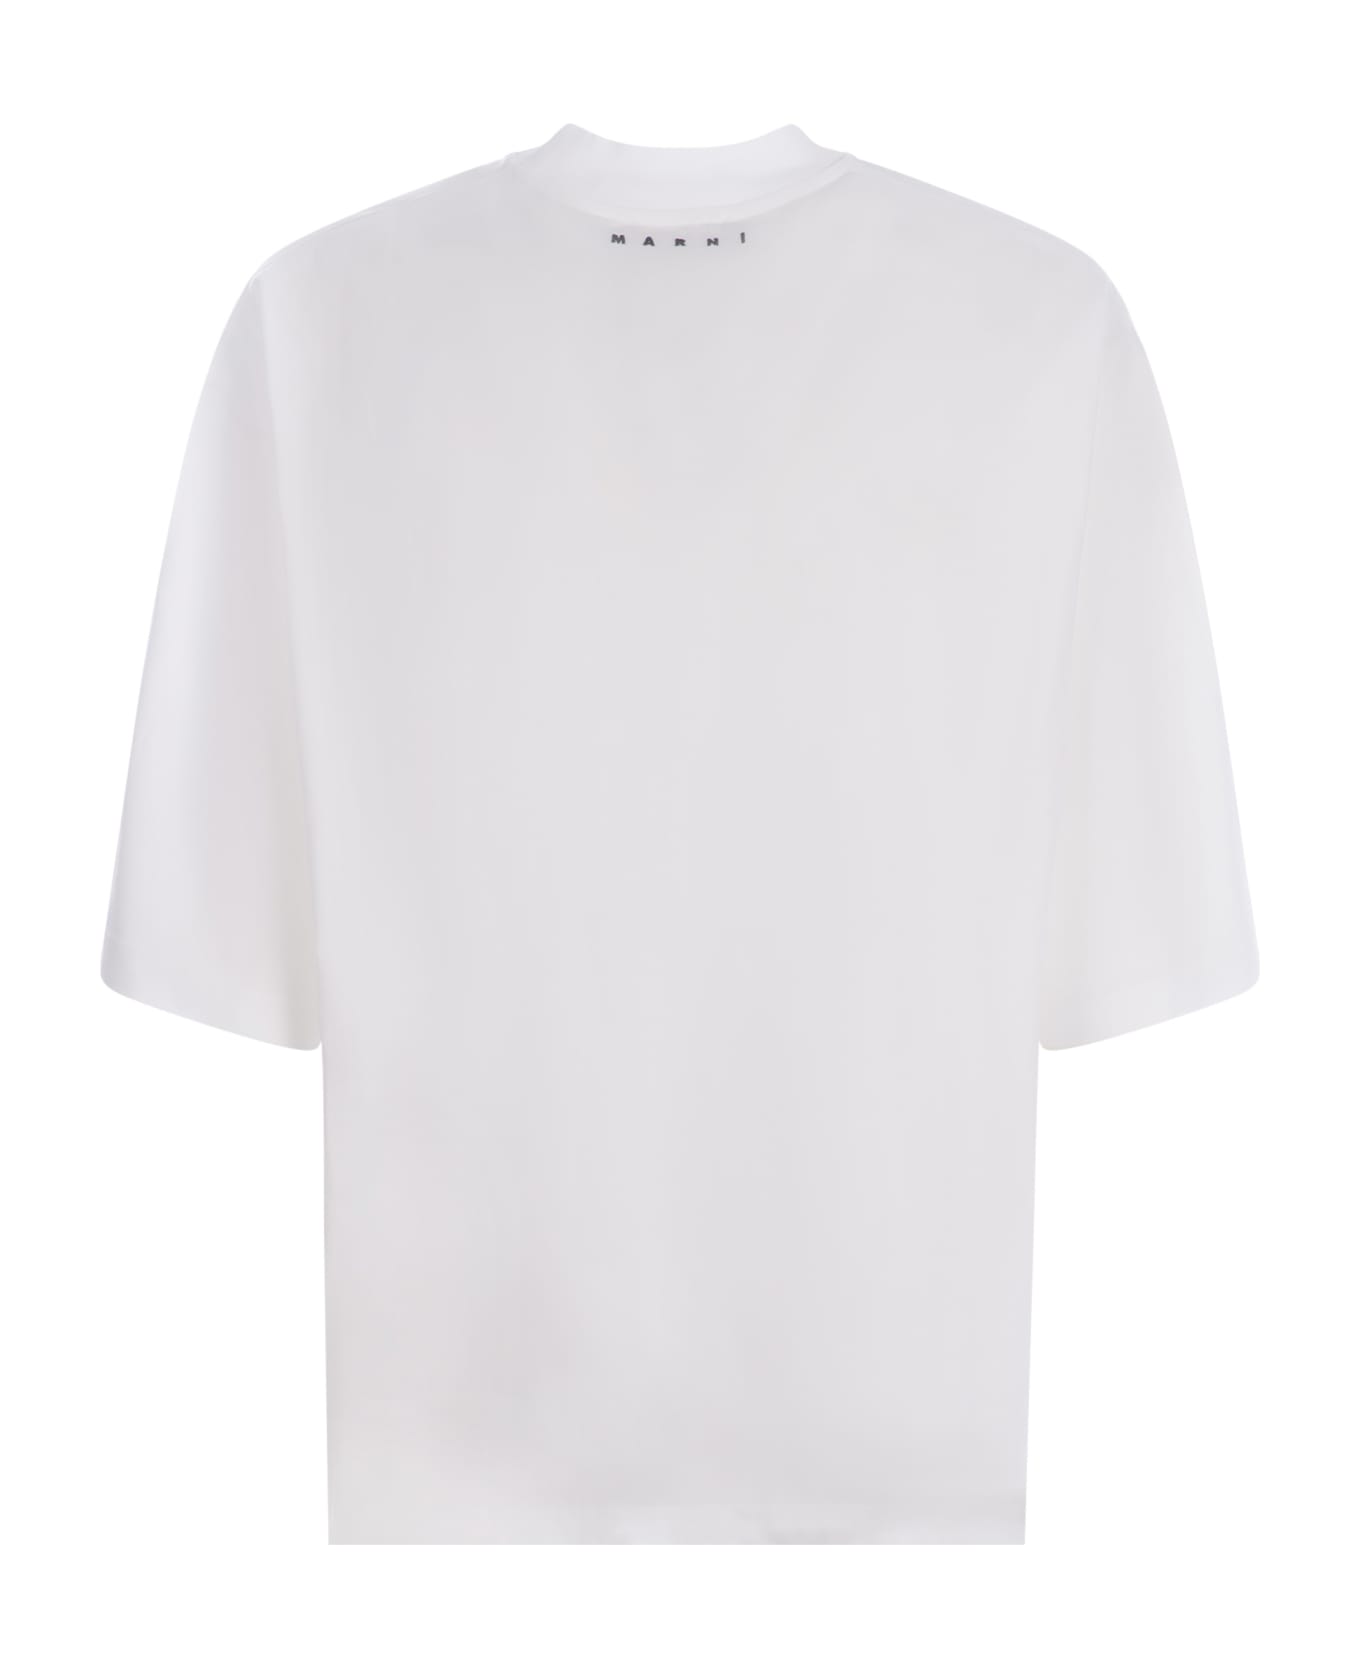 Marni T-shirt Marni Made Of Blend Cotton - Bianco